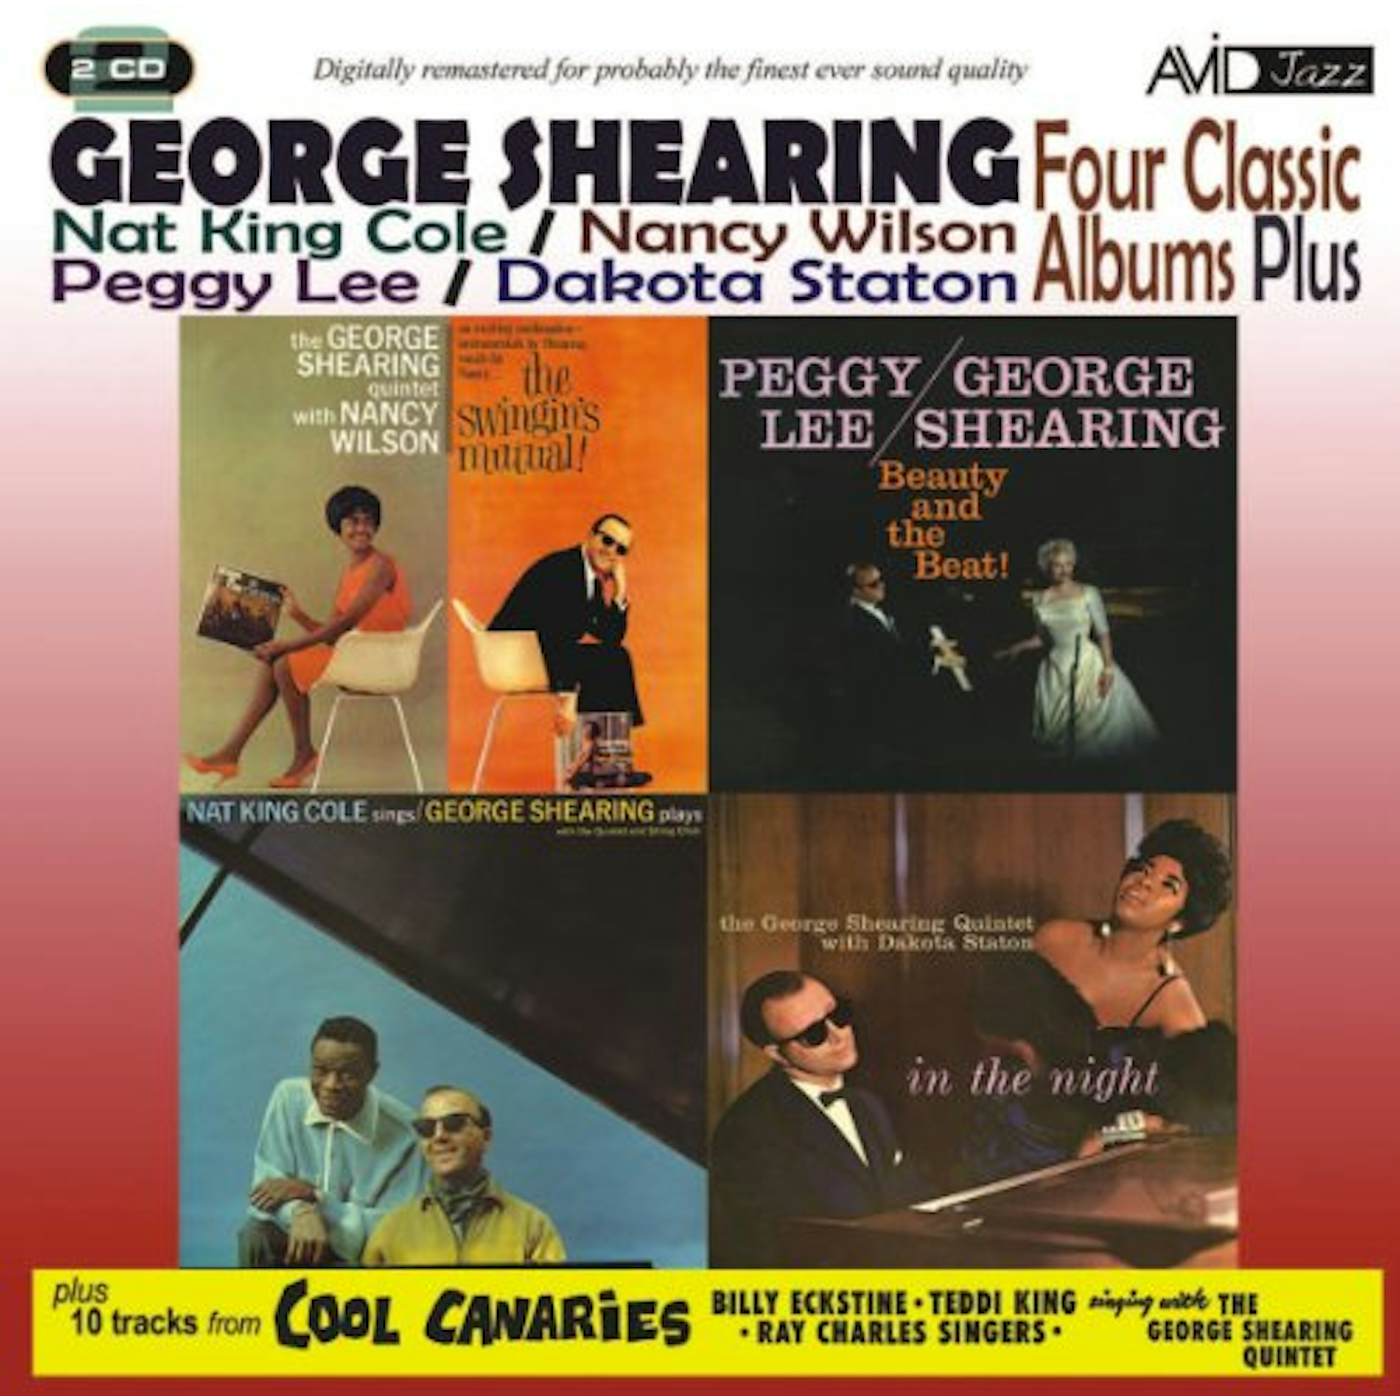 George Shearing COLE SINGS: SHEARING PLAYS / SWINGIN'S MUTUAL CD